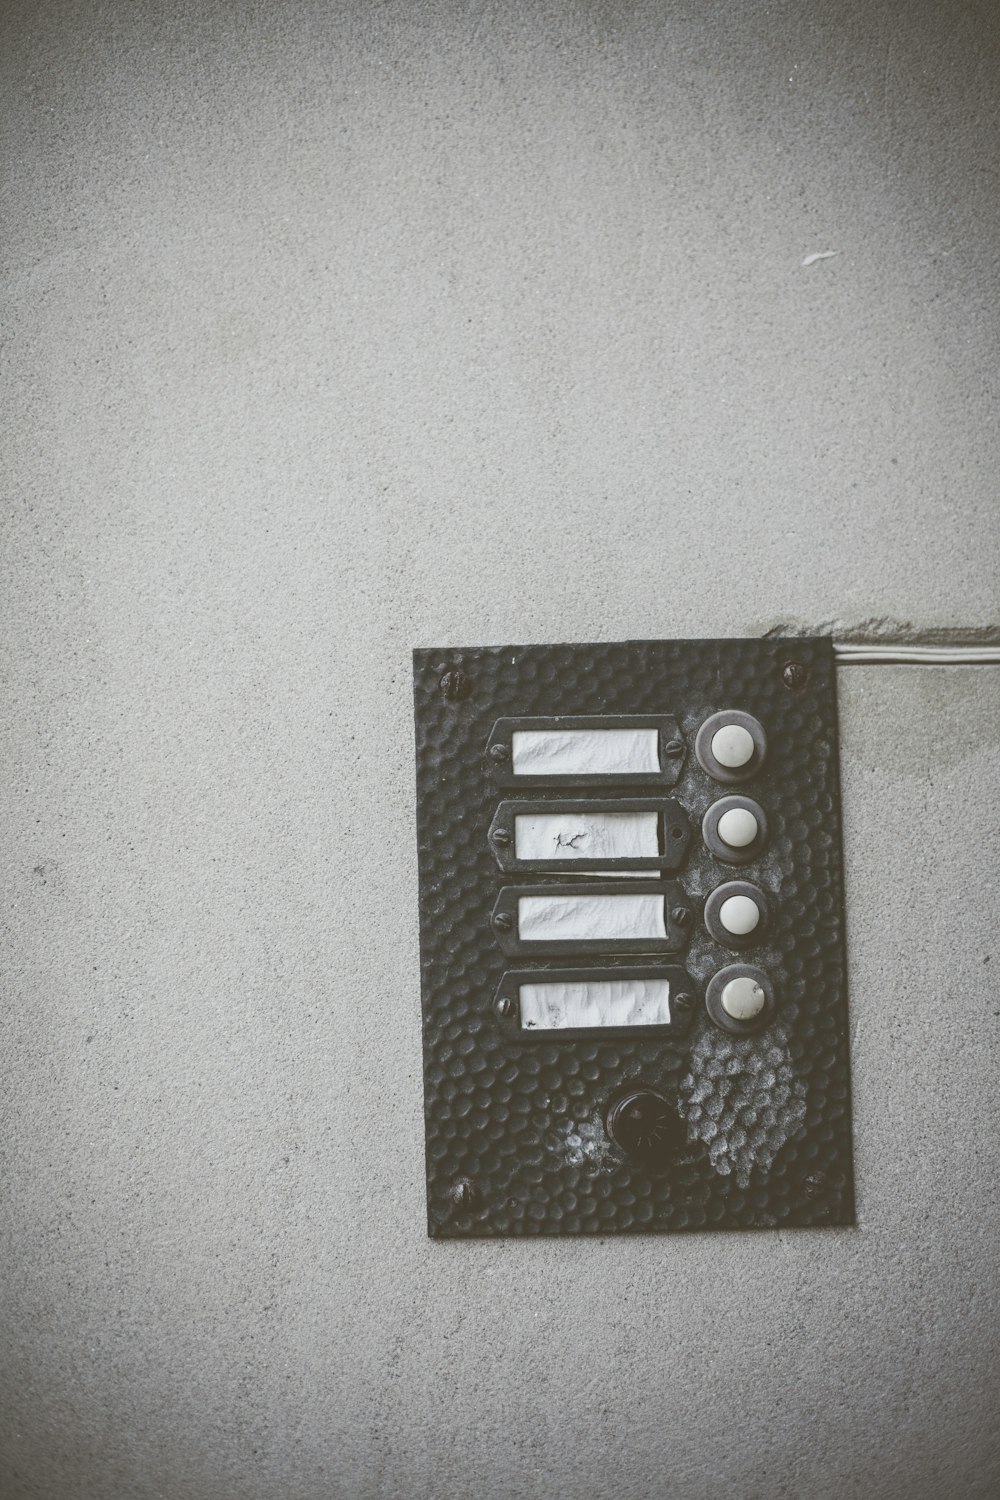 rectangular black and white wall switch during daytime